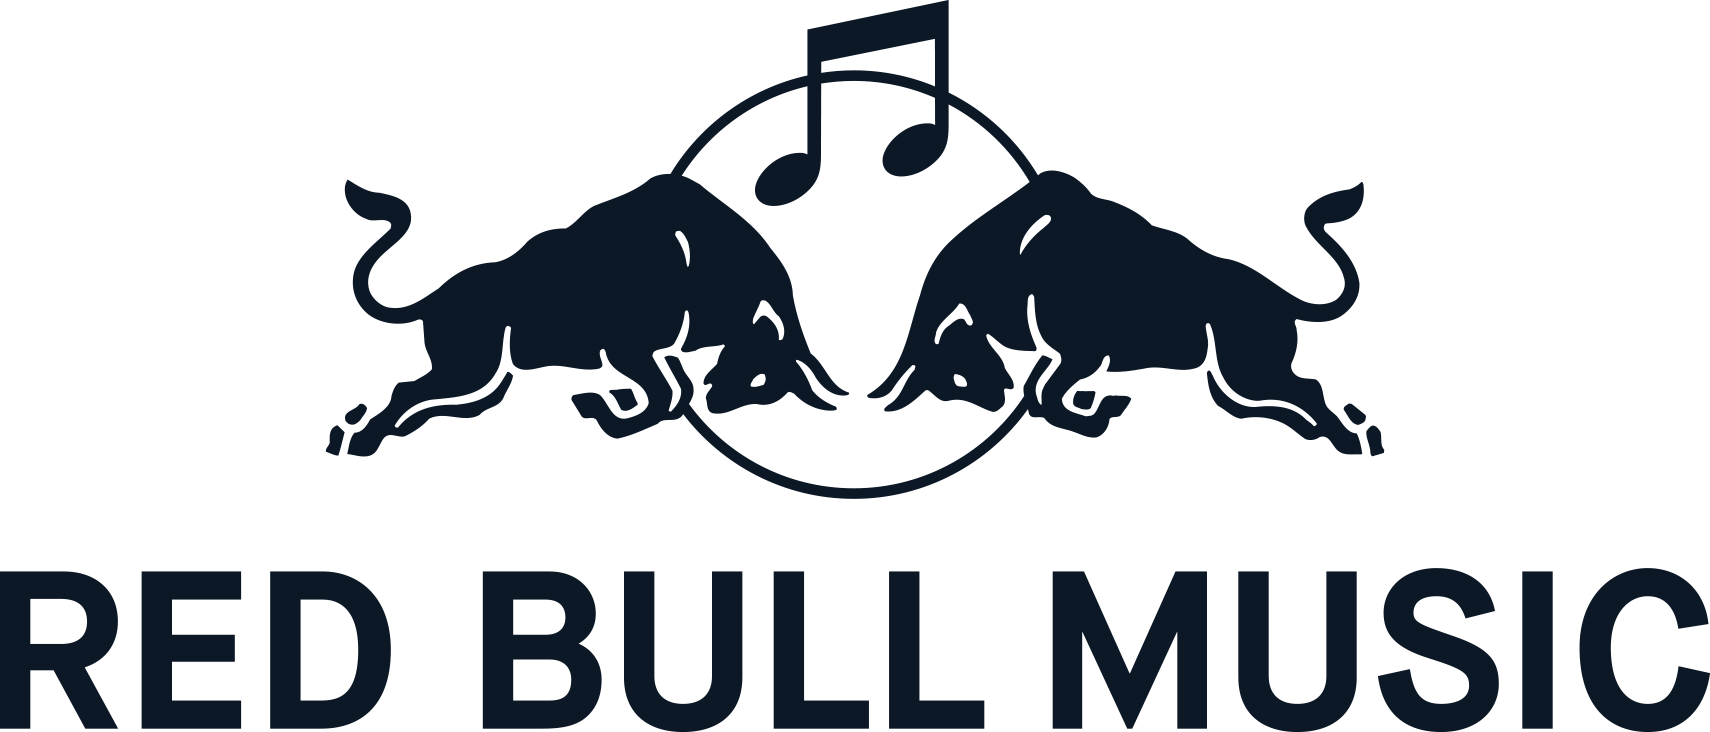 Red Bull Can Logo - Multi-platform media company | Red Bull Media House